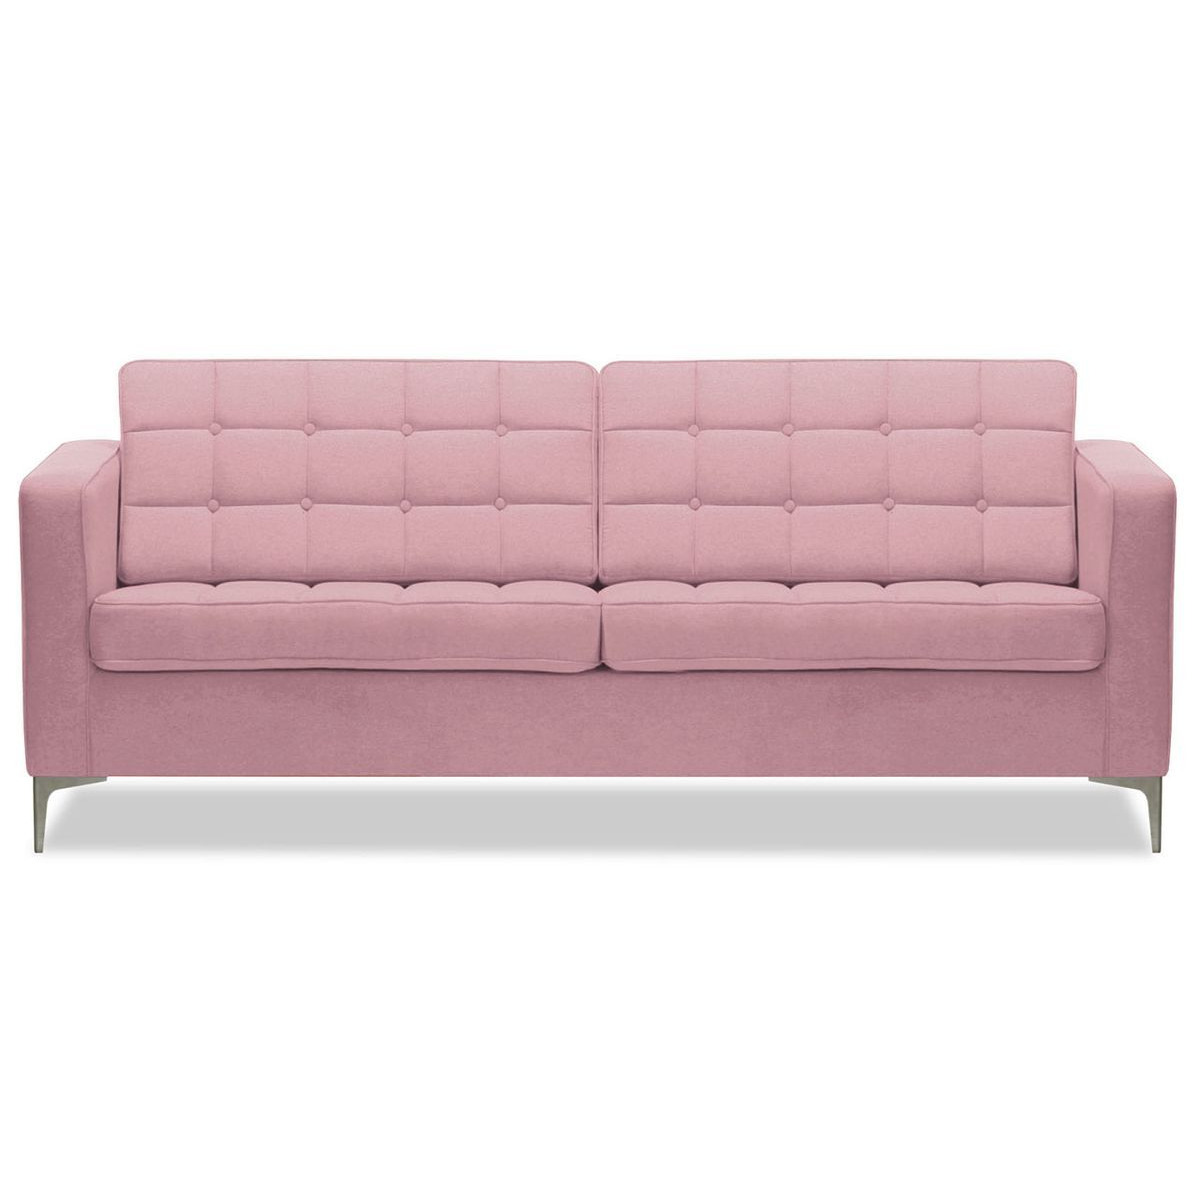 Finn 3 Seater Sofa, pink - image 1